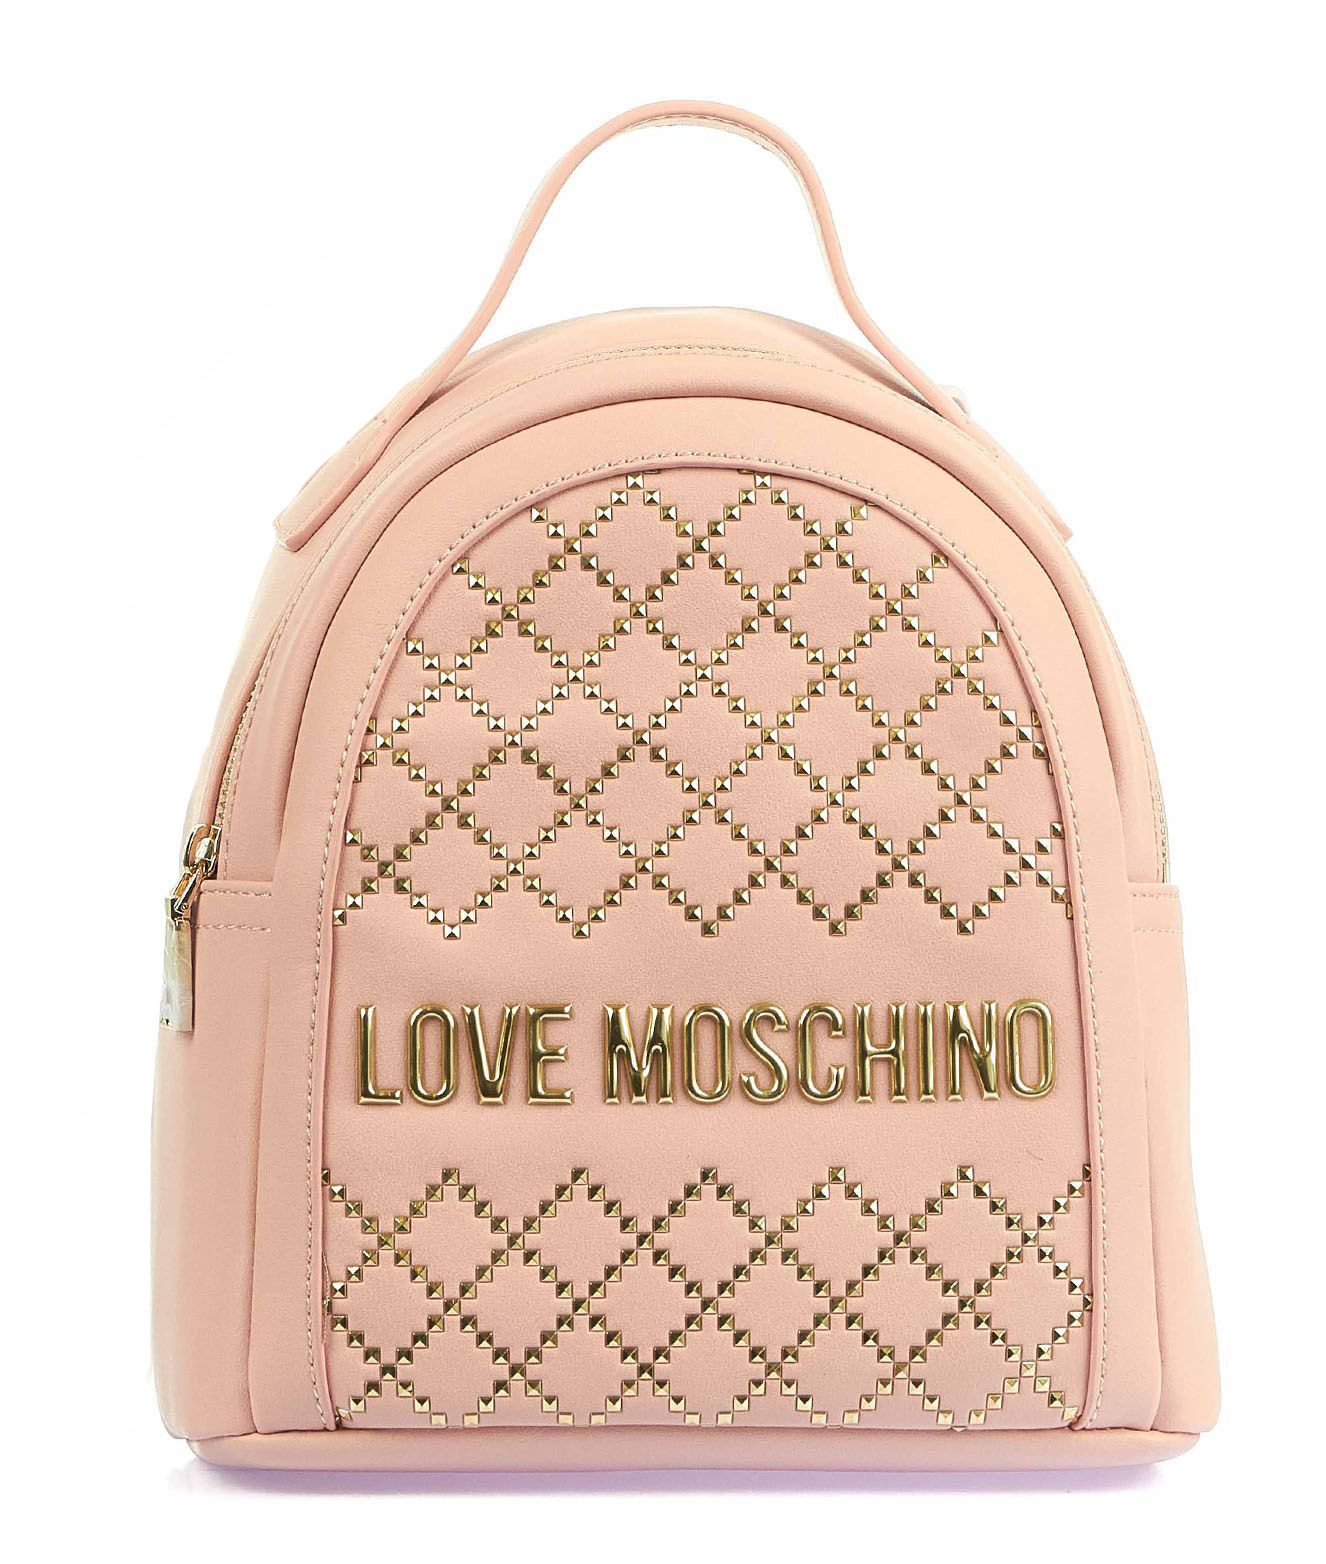 Moschino Handbags India Price | semashow.com